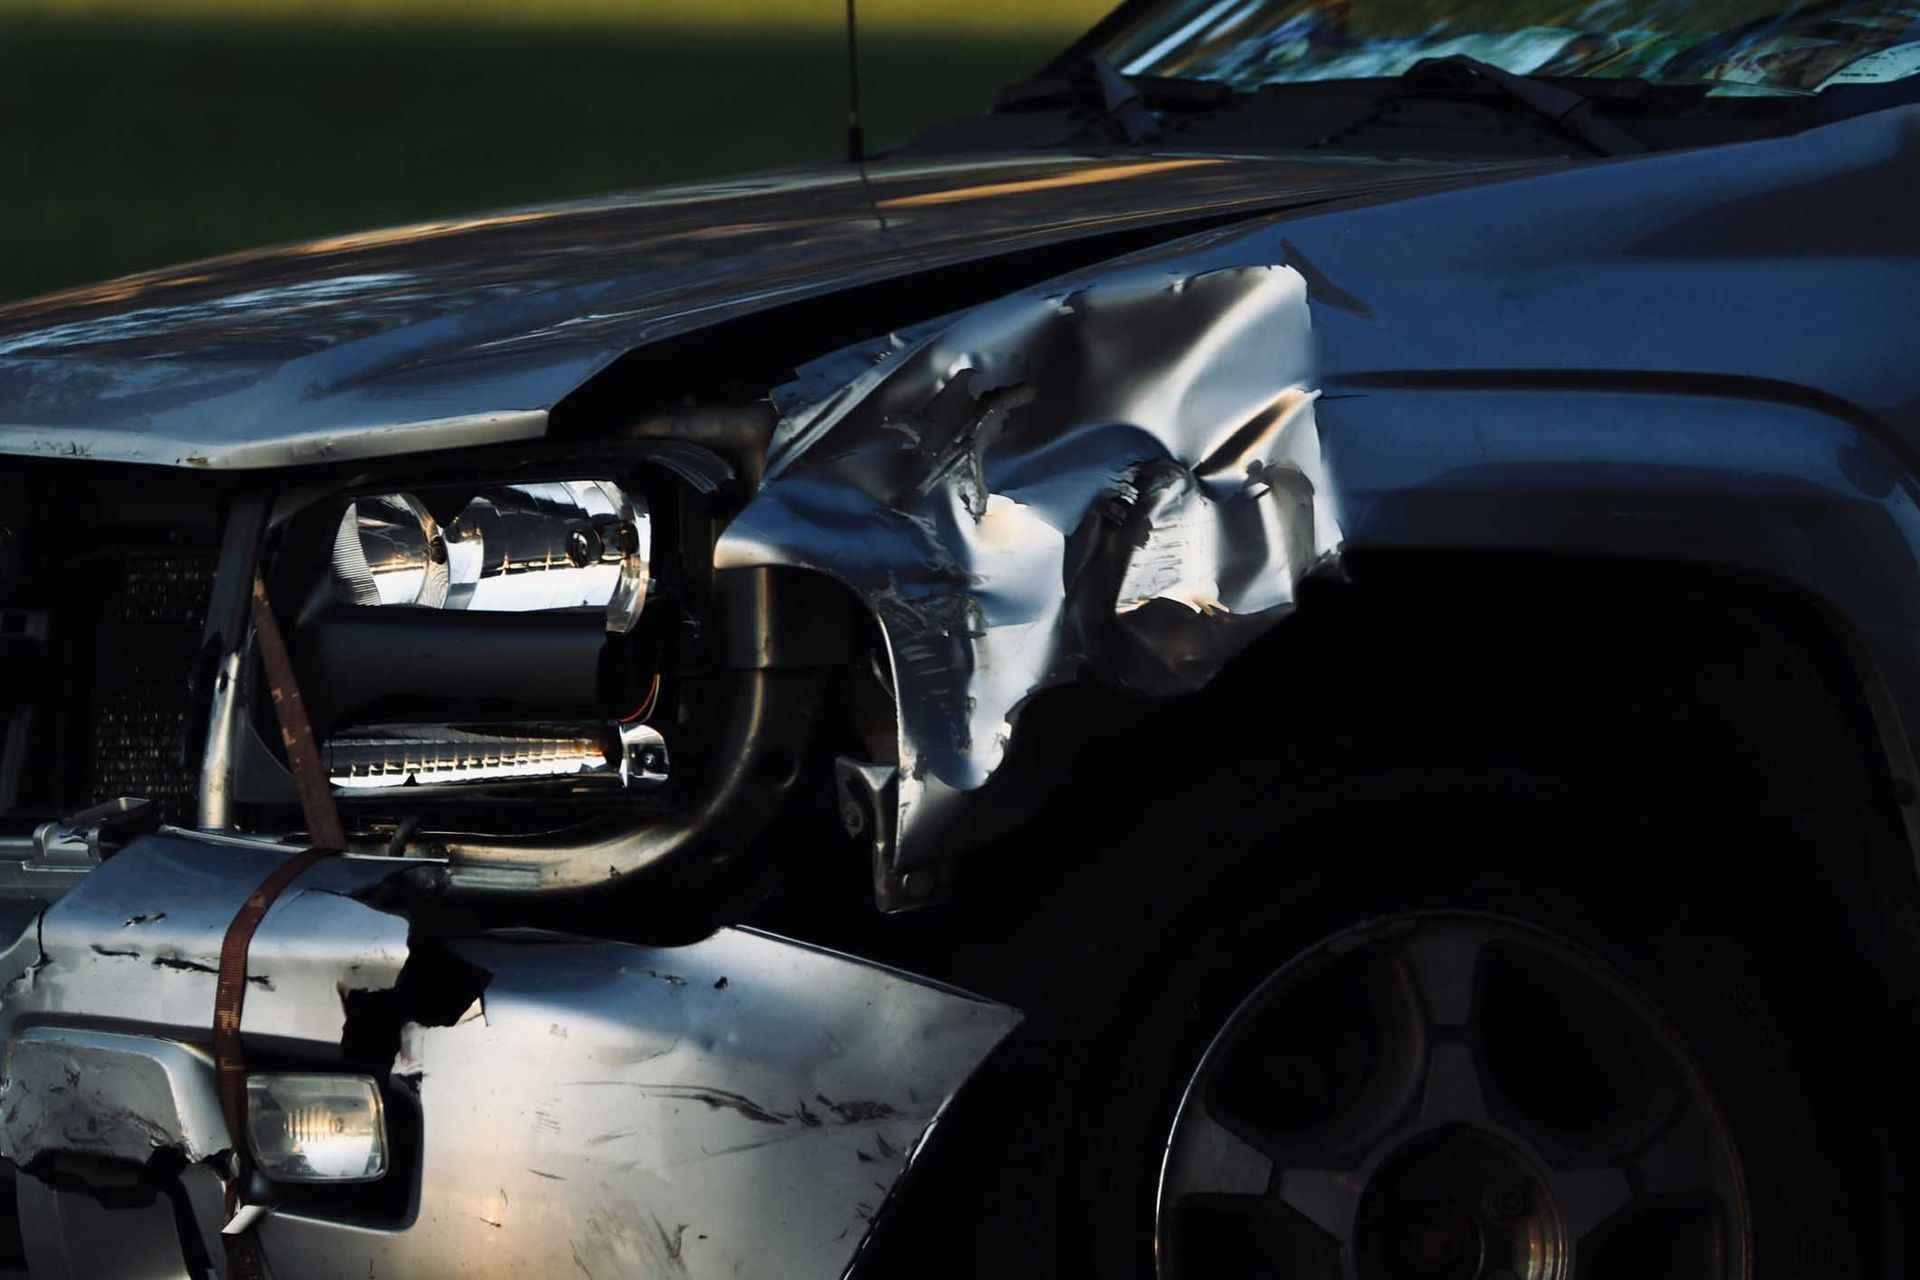 Car with damaged front — Lakeland, FL — Kaylor Law Group